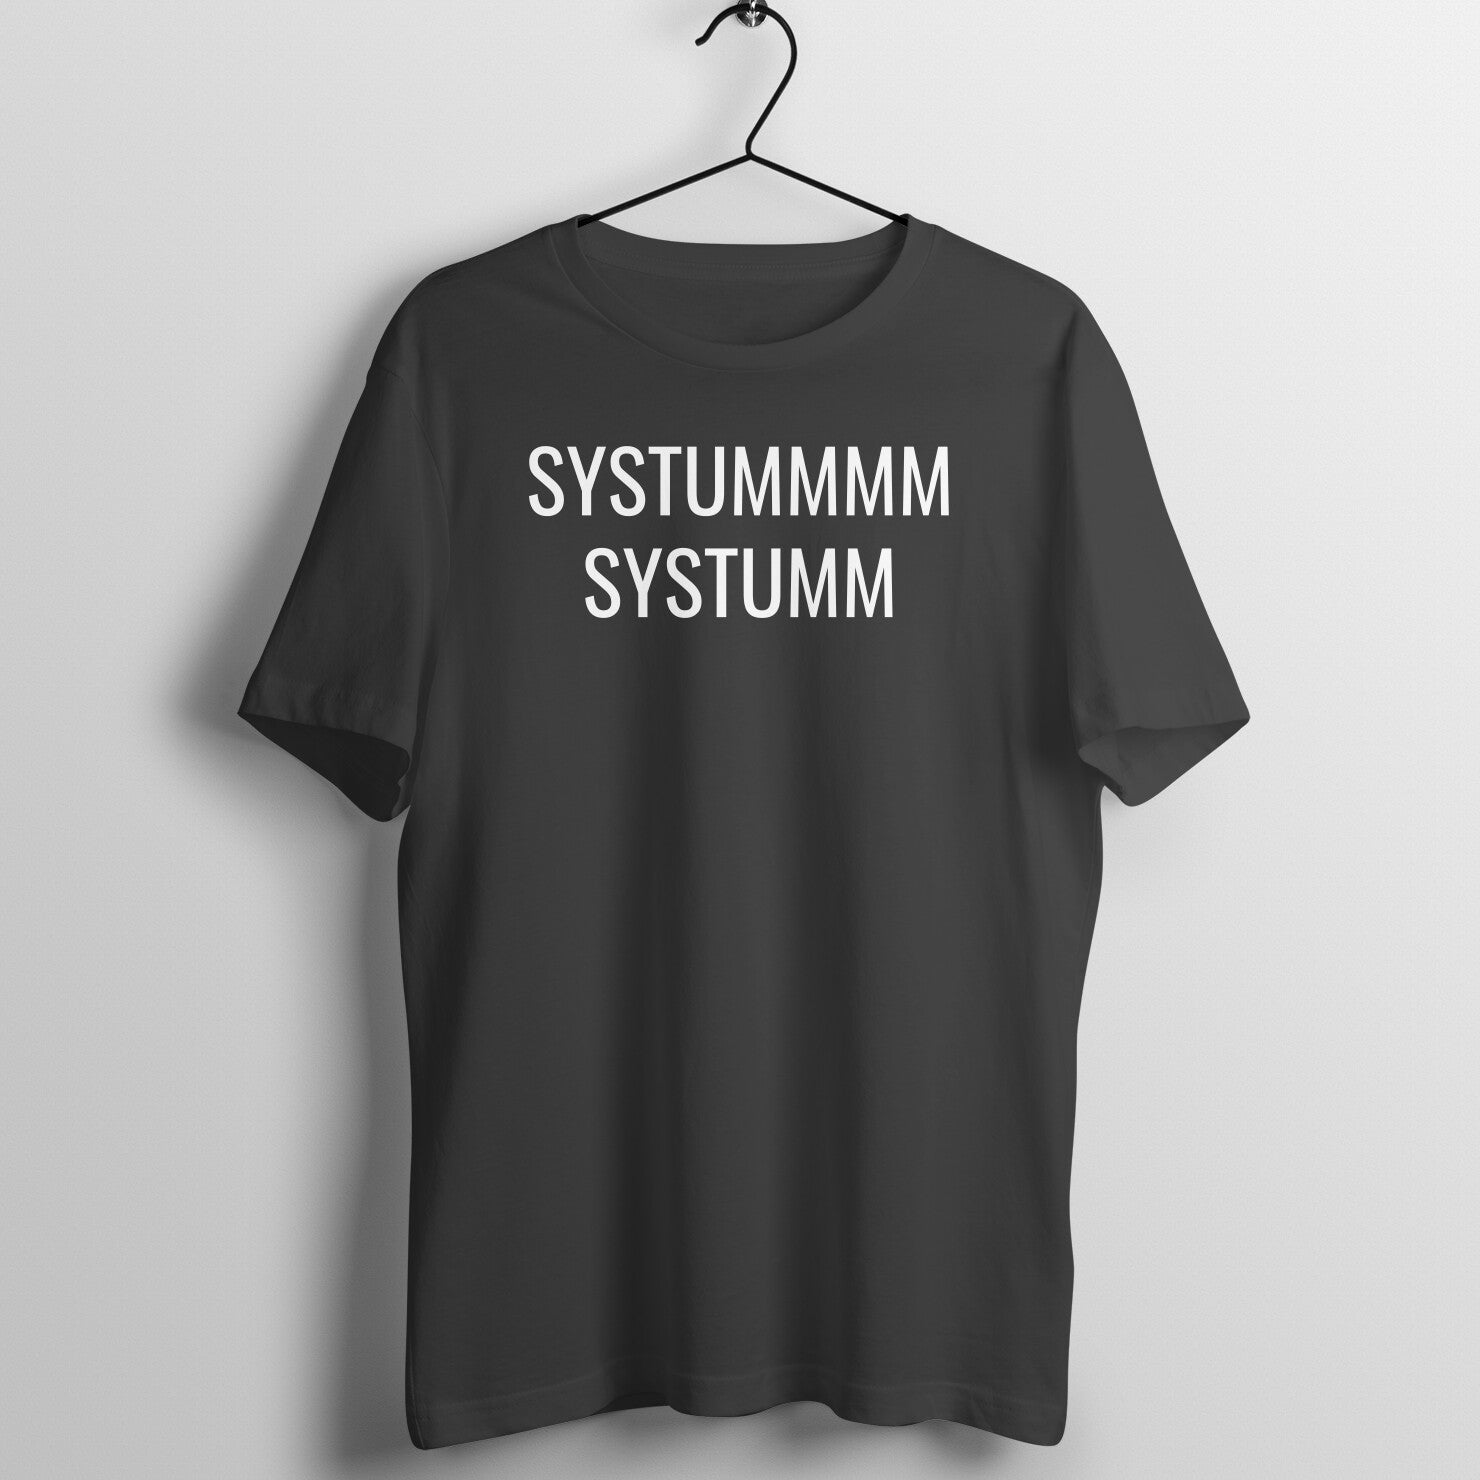 Systummmm Systumm Exclusive Black T Shirt for Haryanvi Men and Women